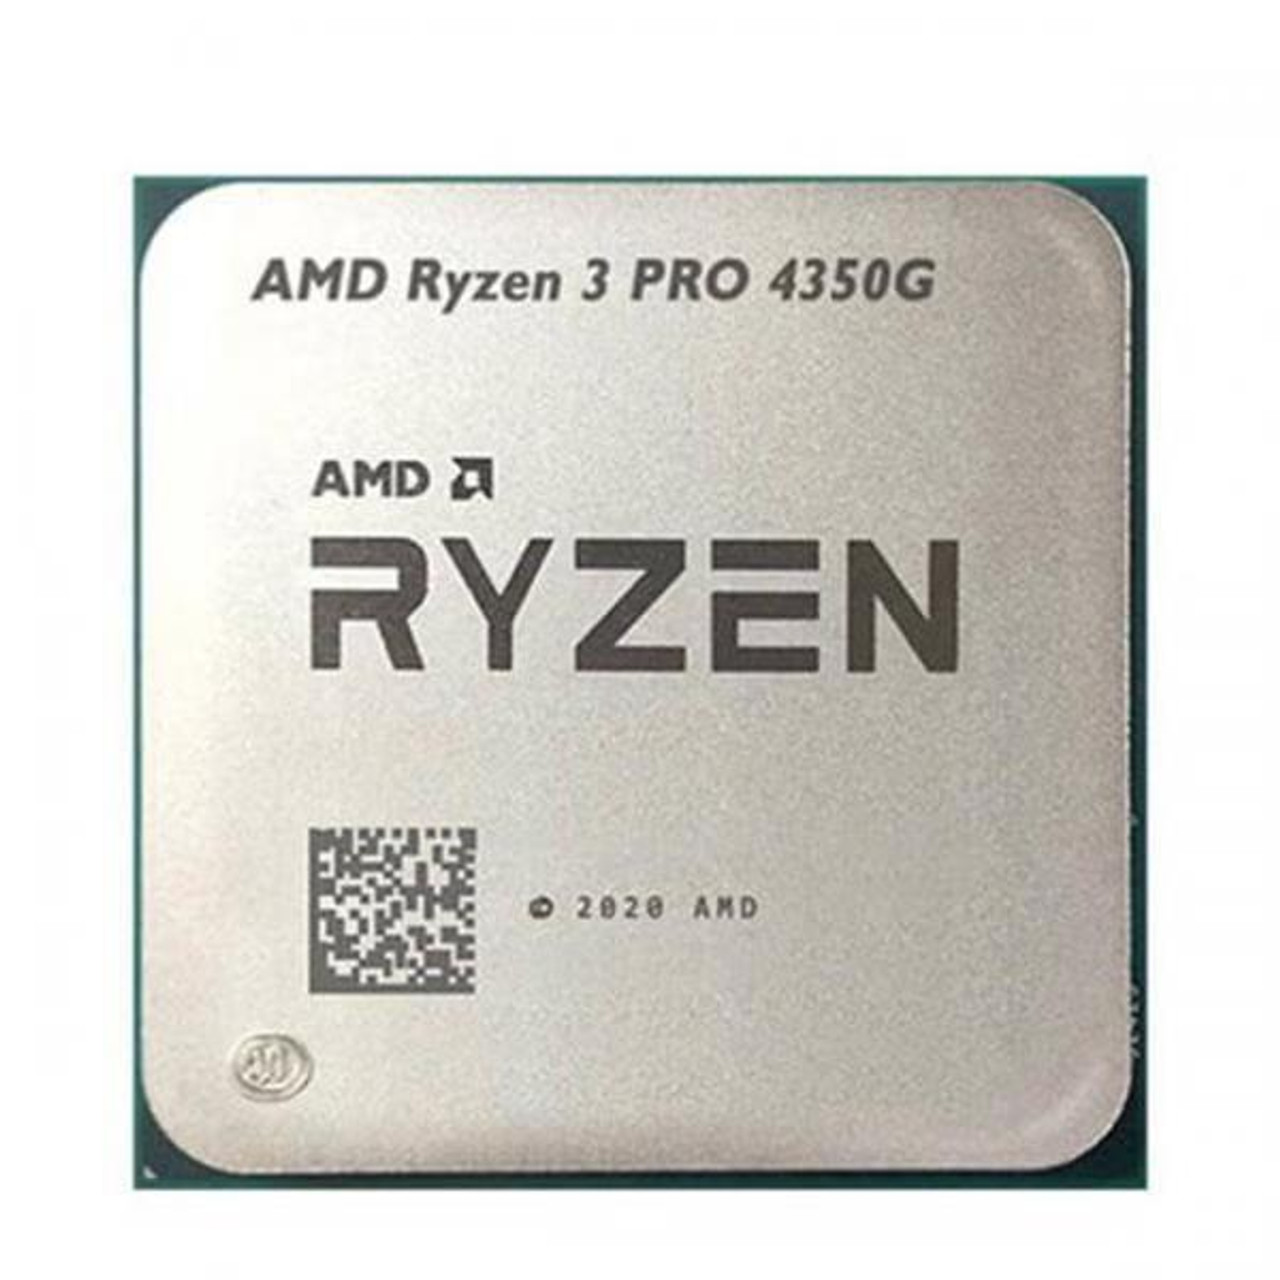 AMD Ryzen 3 PRO 4350G Quad-Core 3.80GHz 4MB L3 Cache Socket AM4 Processor